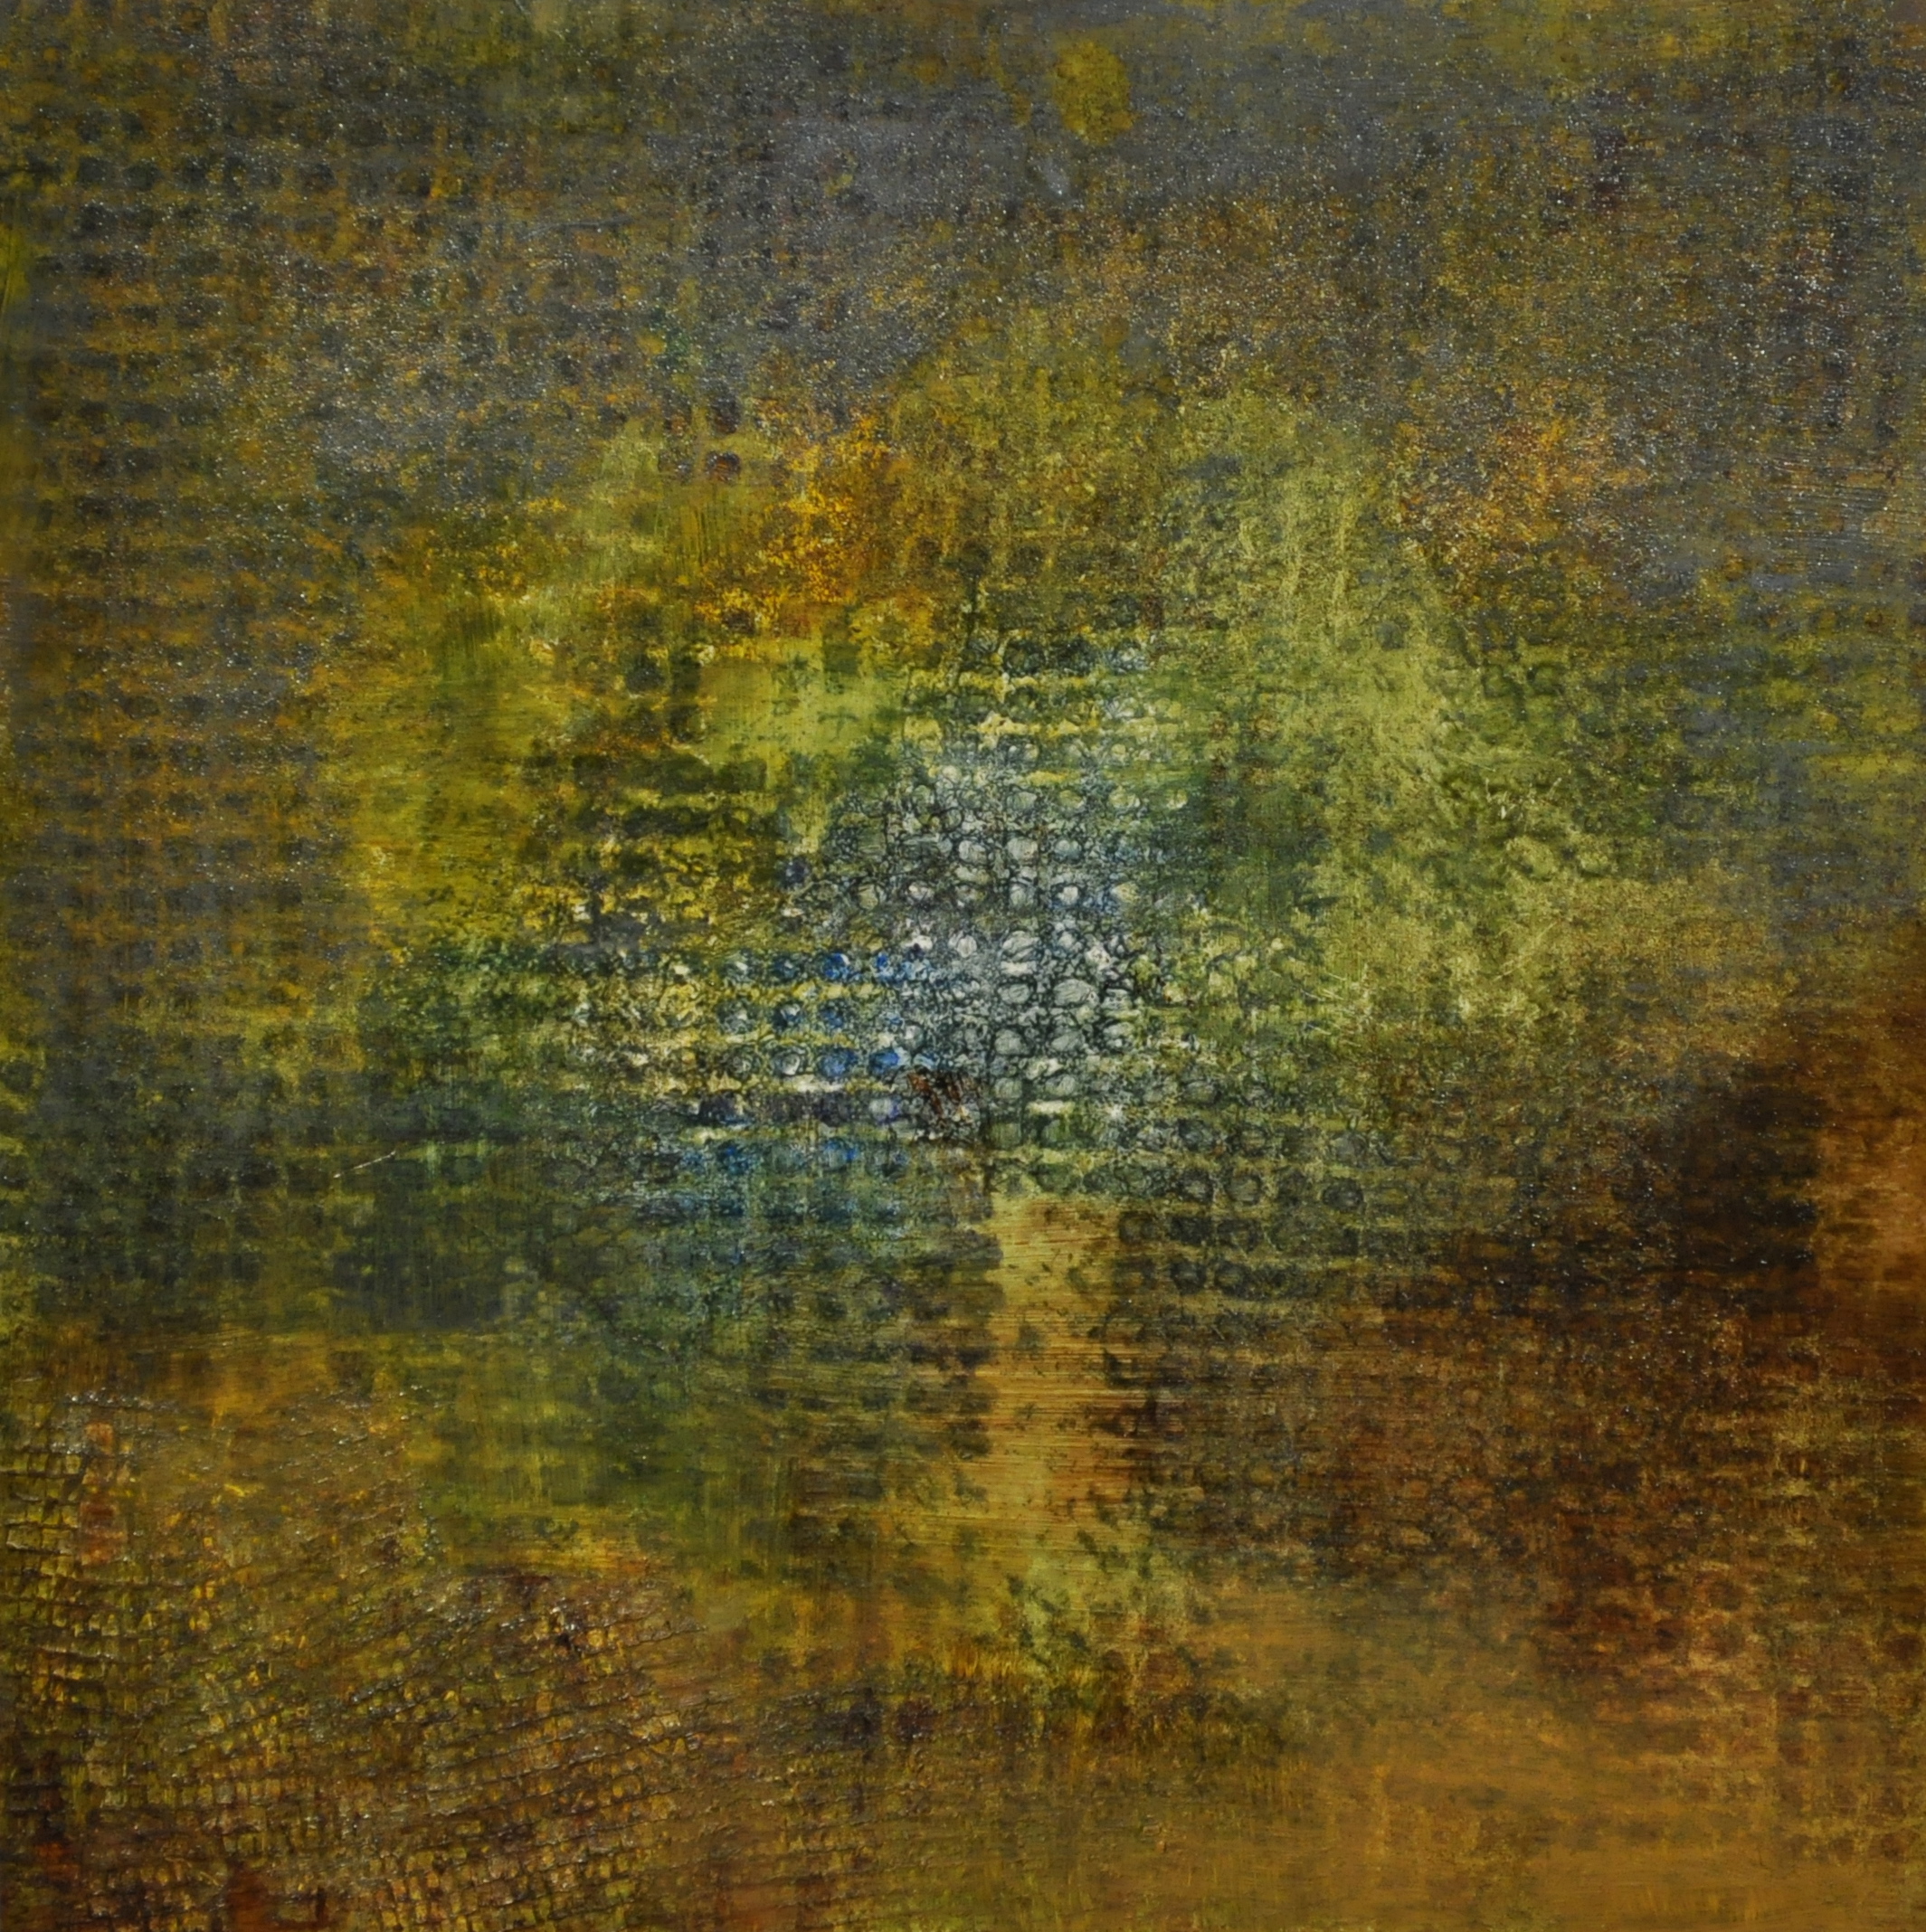  exchange, 2017, oil on wood panel, 15.2 x 15.2 cm 